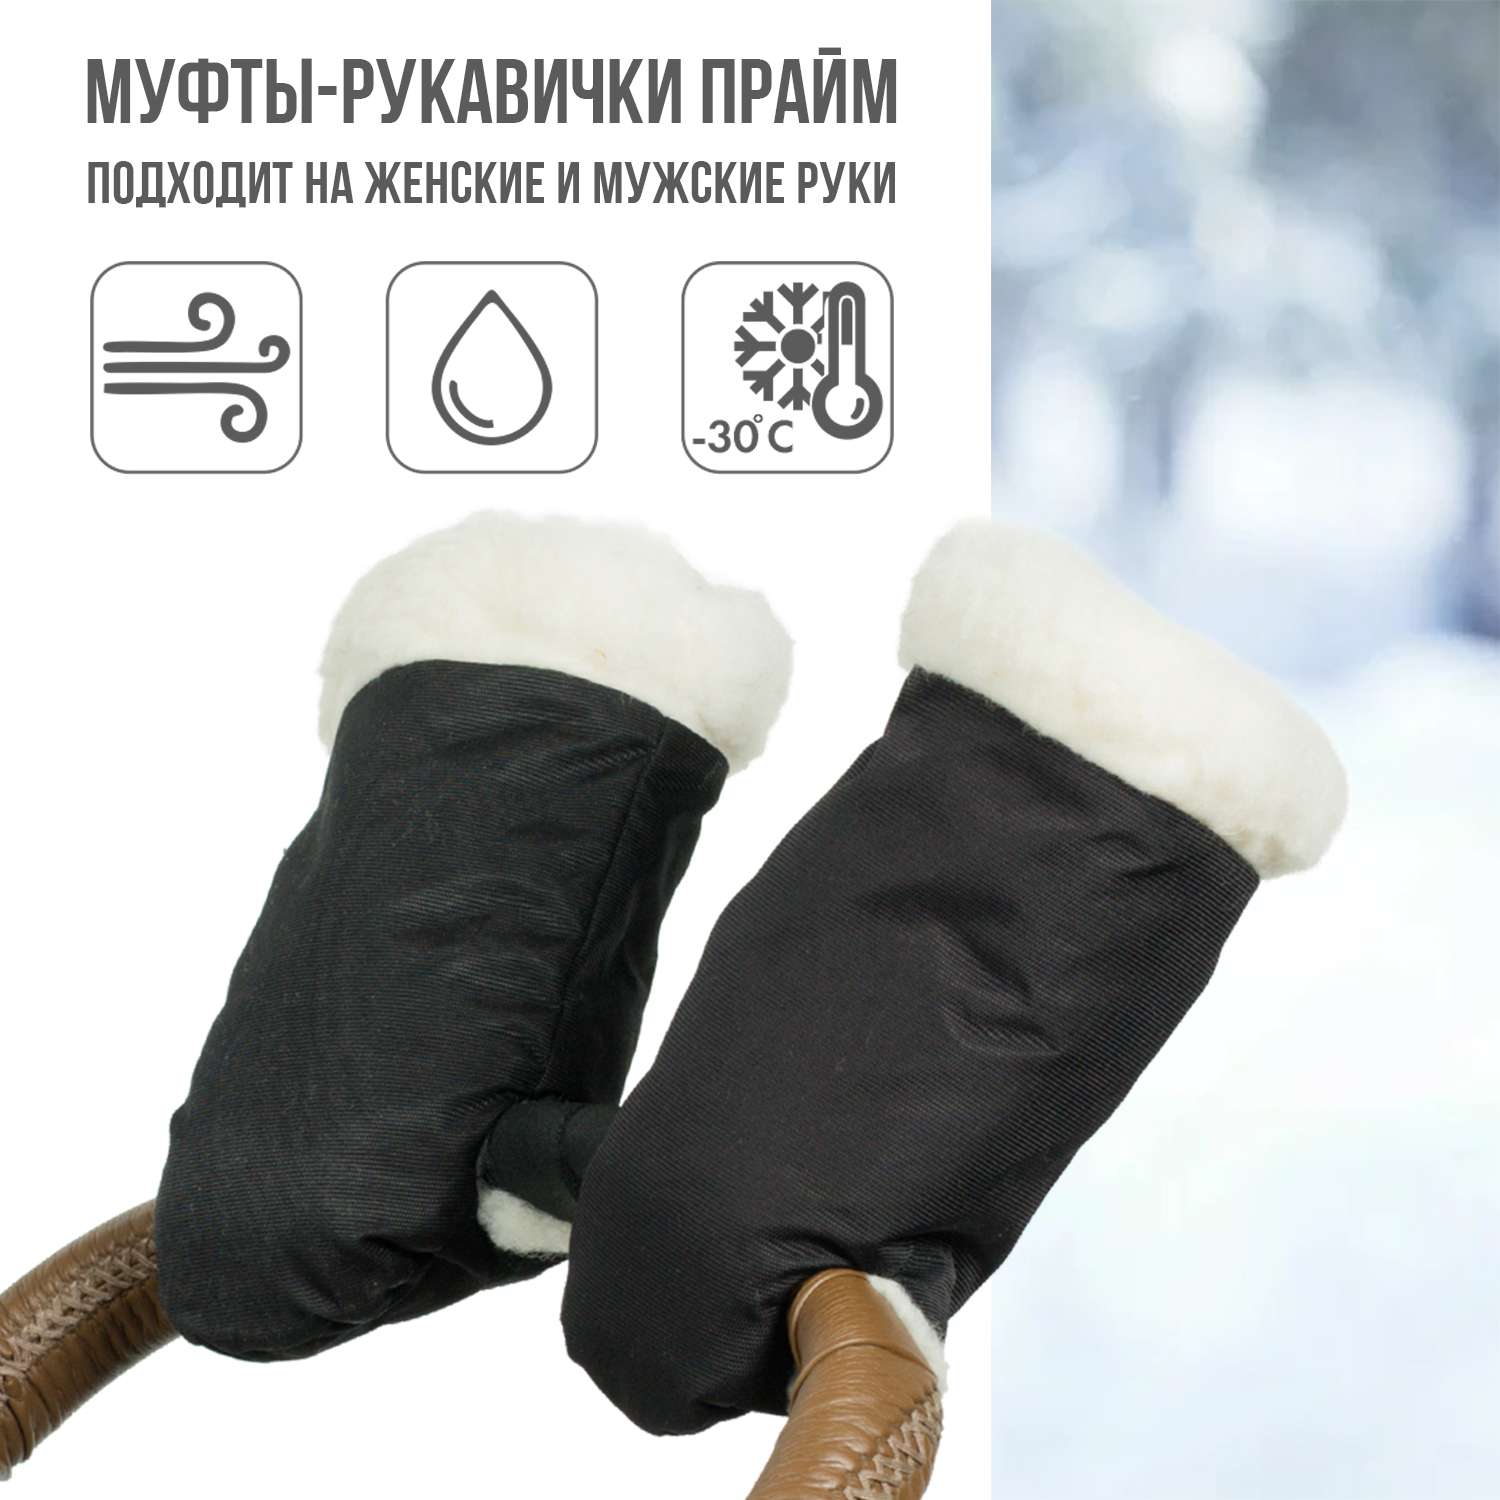 Муфта-рукавички для коляски Чудо-чадо меховая Прайм чёрная МРМ04-001 - фото 1